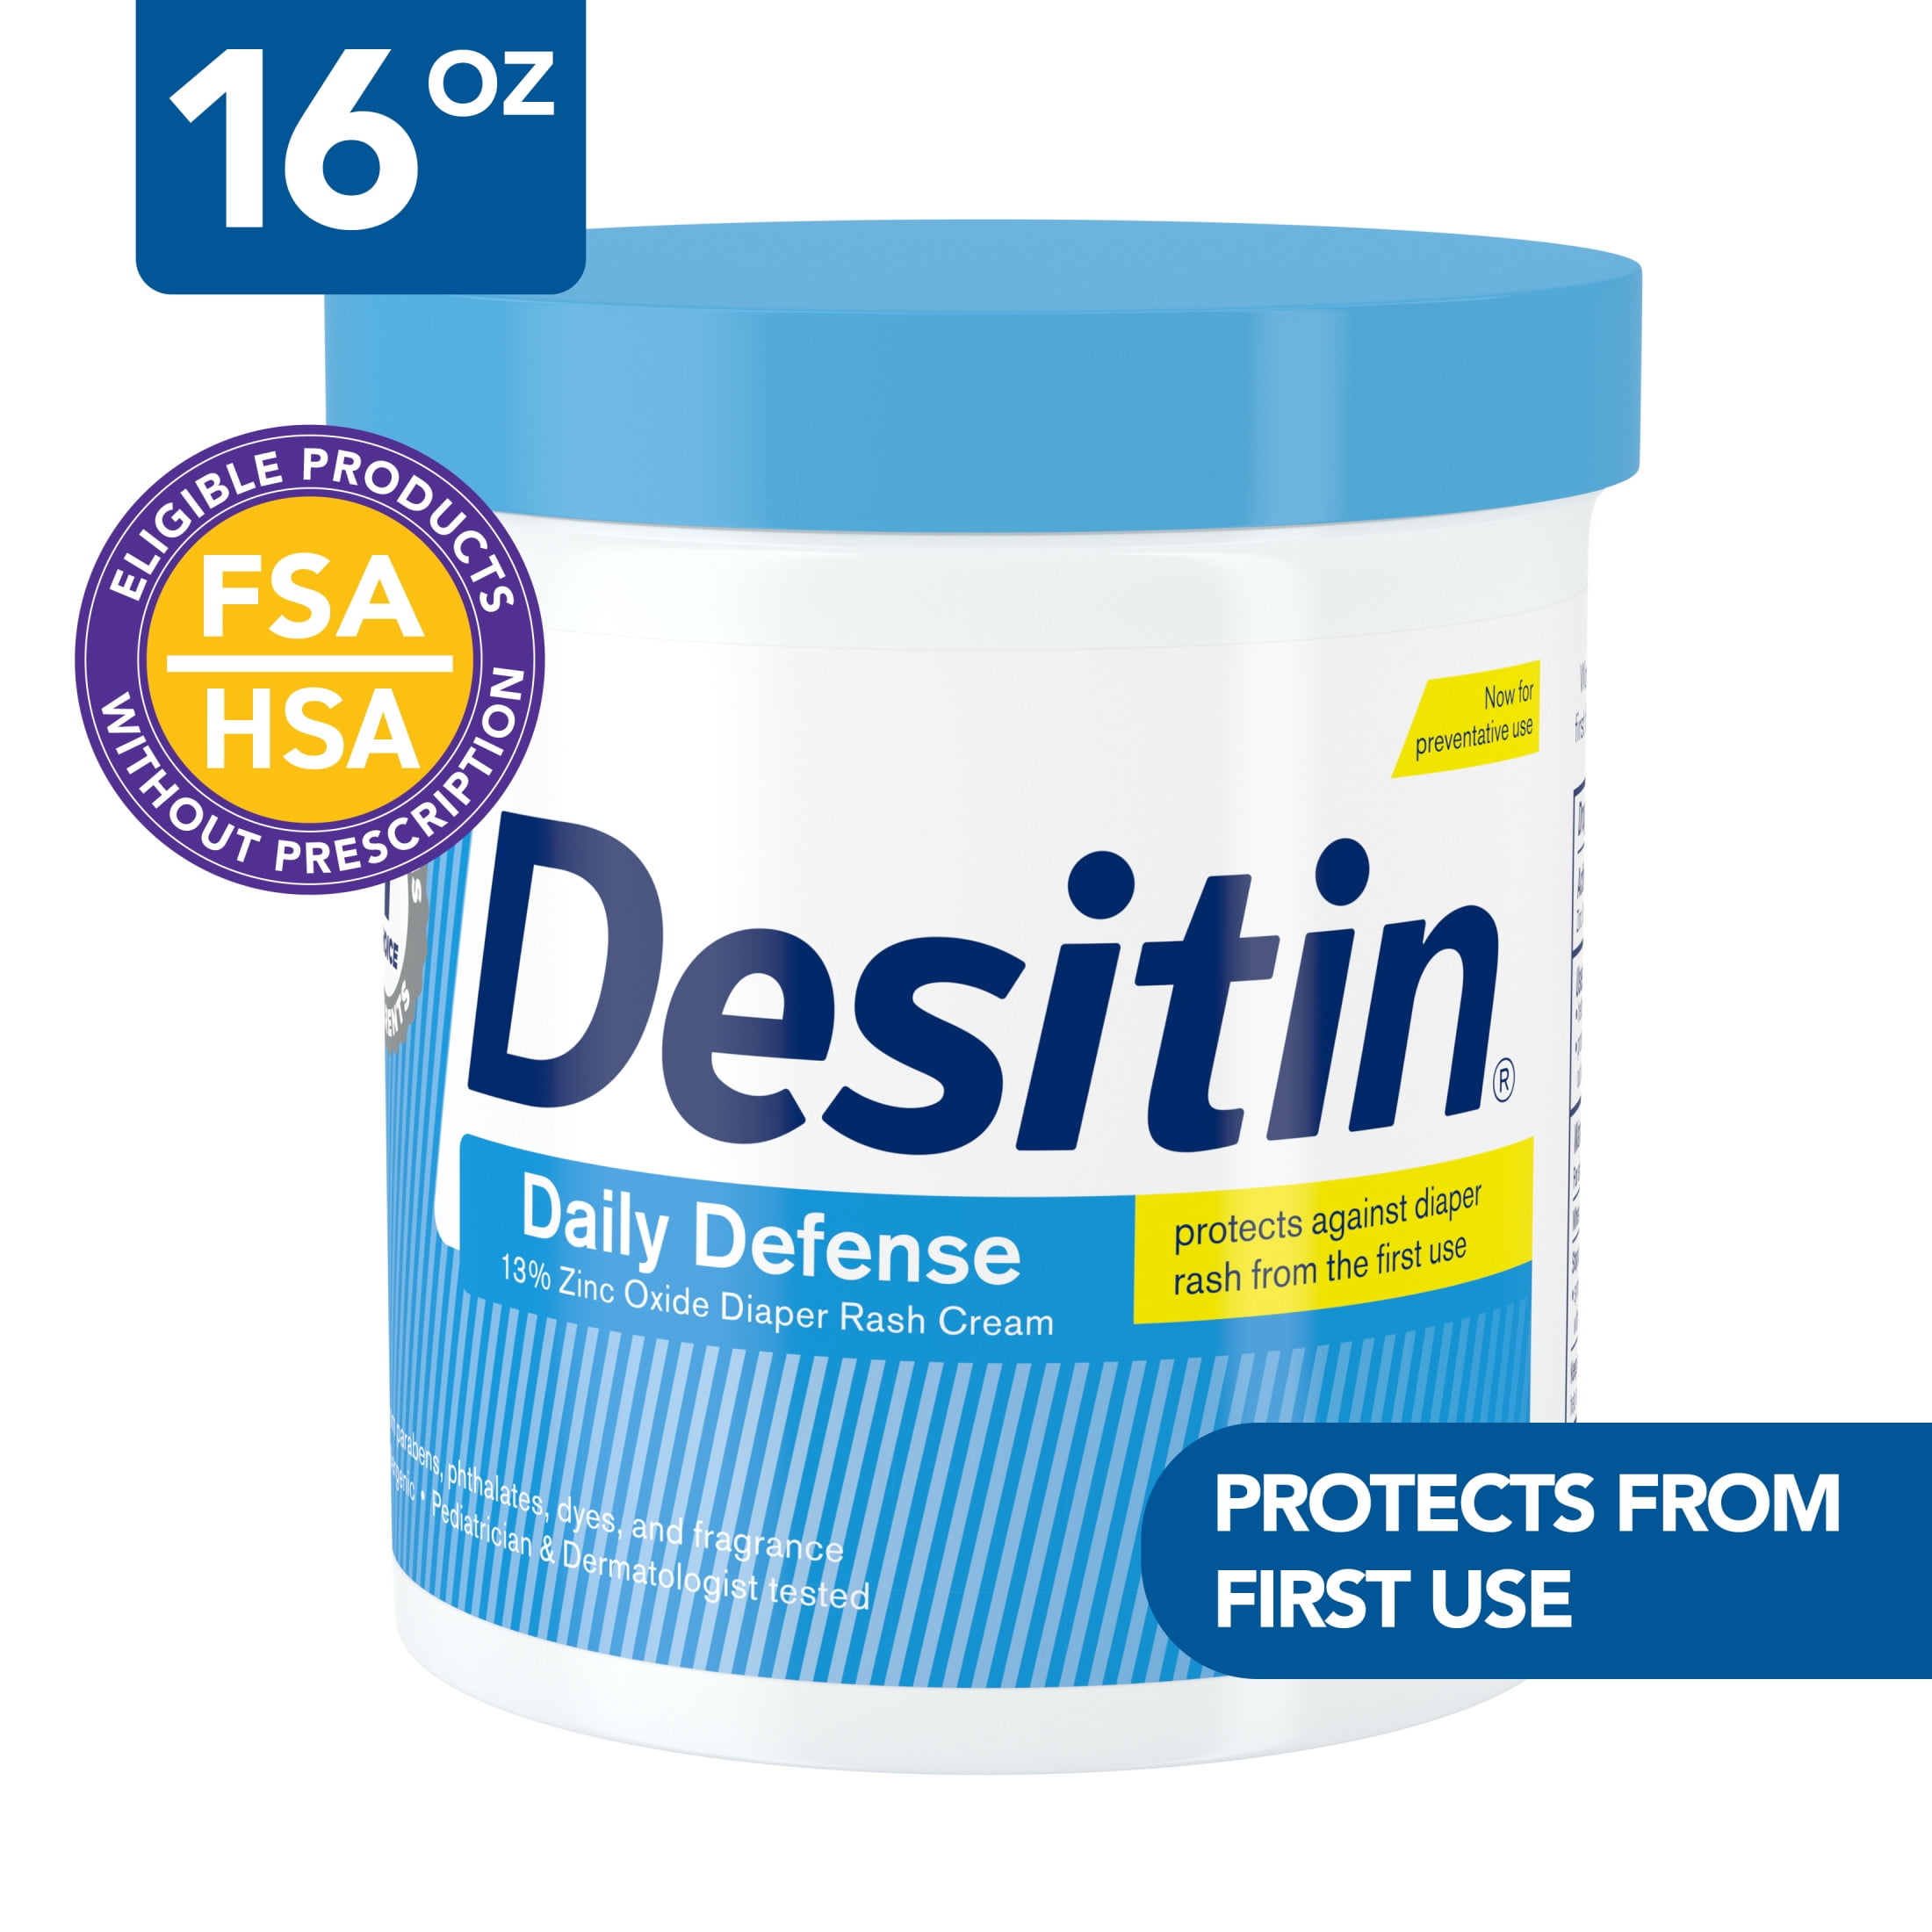 Desitin Daily Defense Baby Diaper Rash Cream, Butt Paste with 13